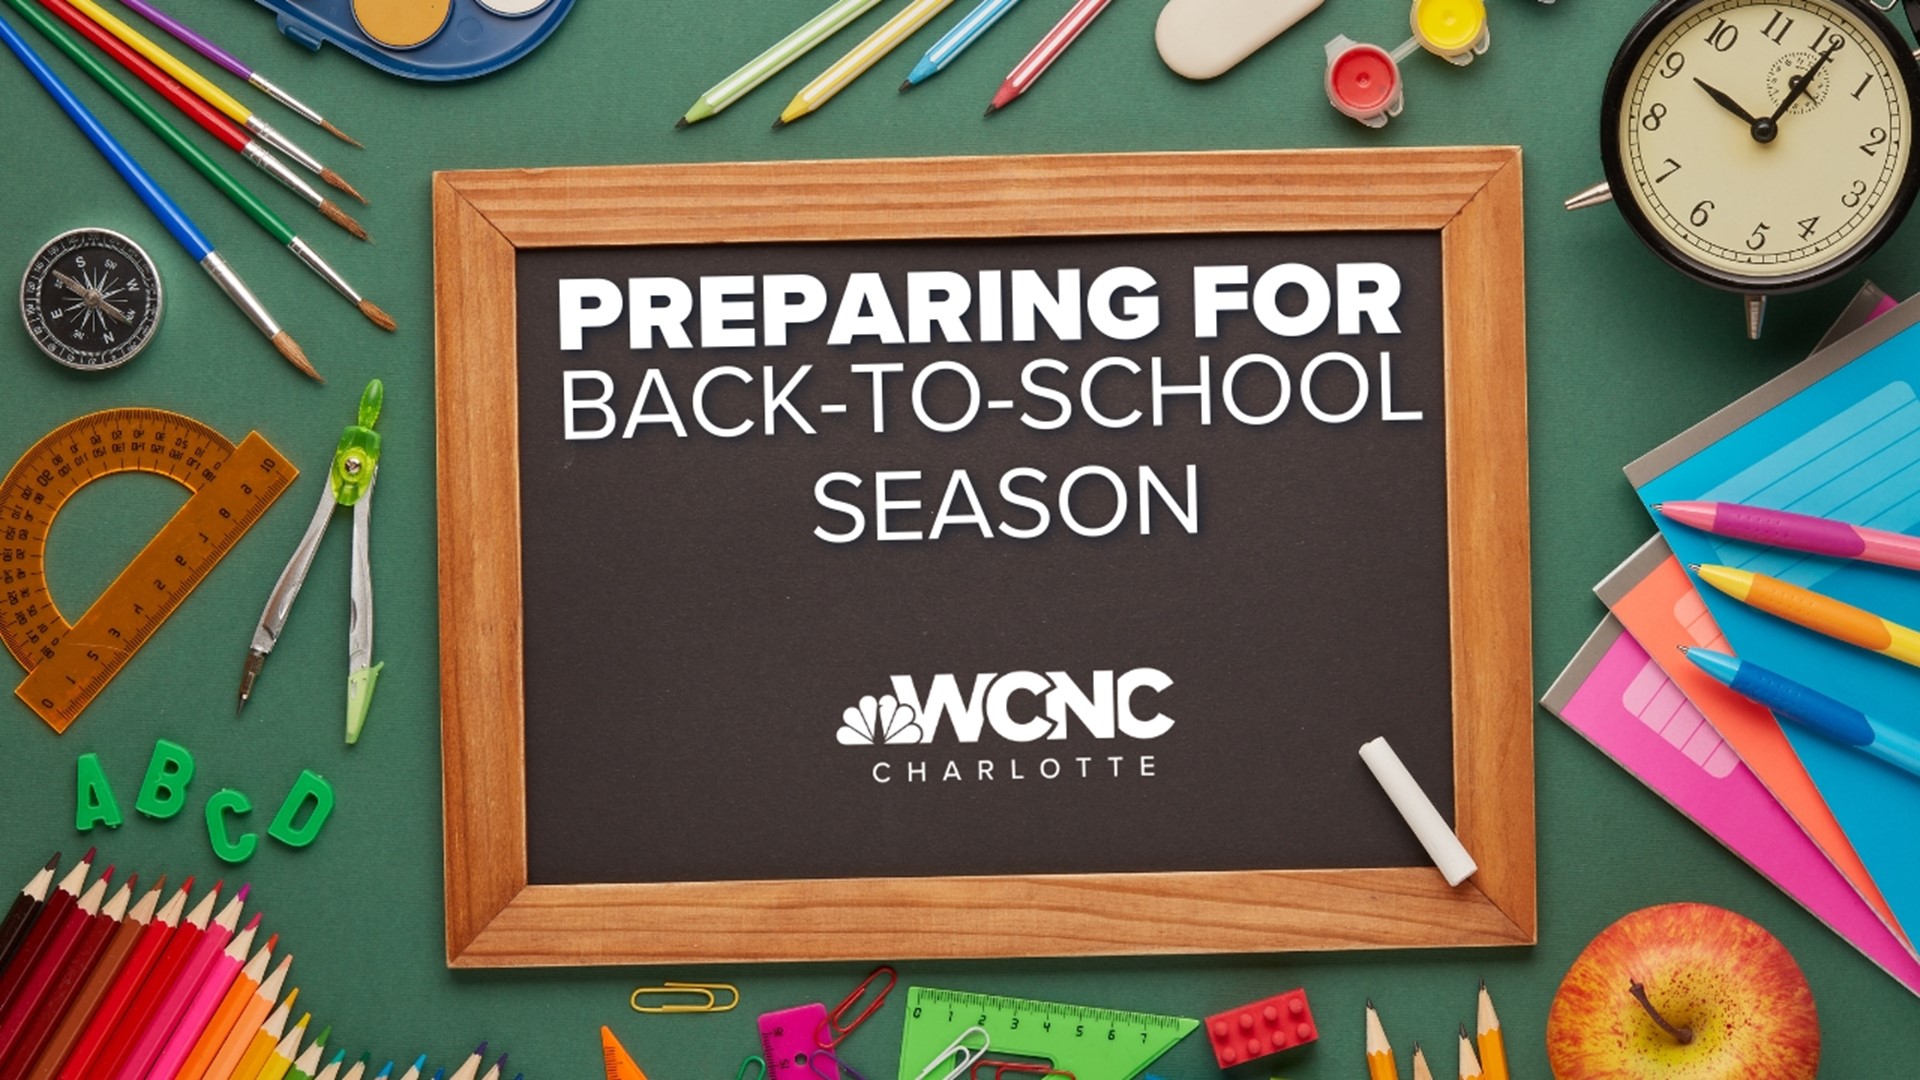 Back-to-School Season Tips and Tricks